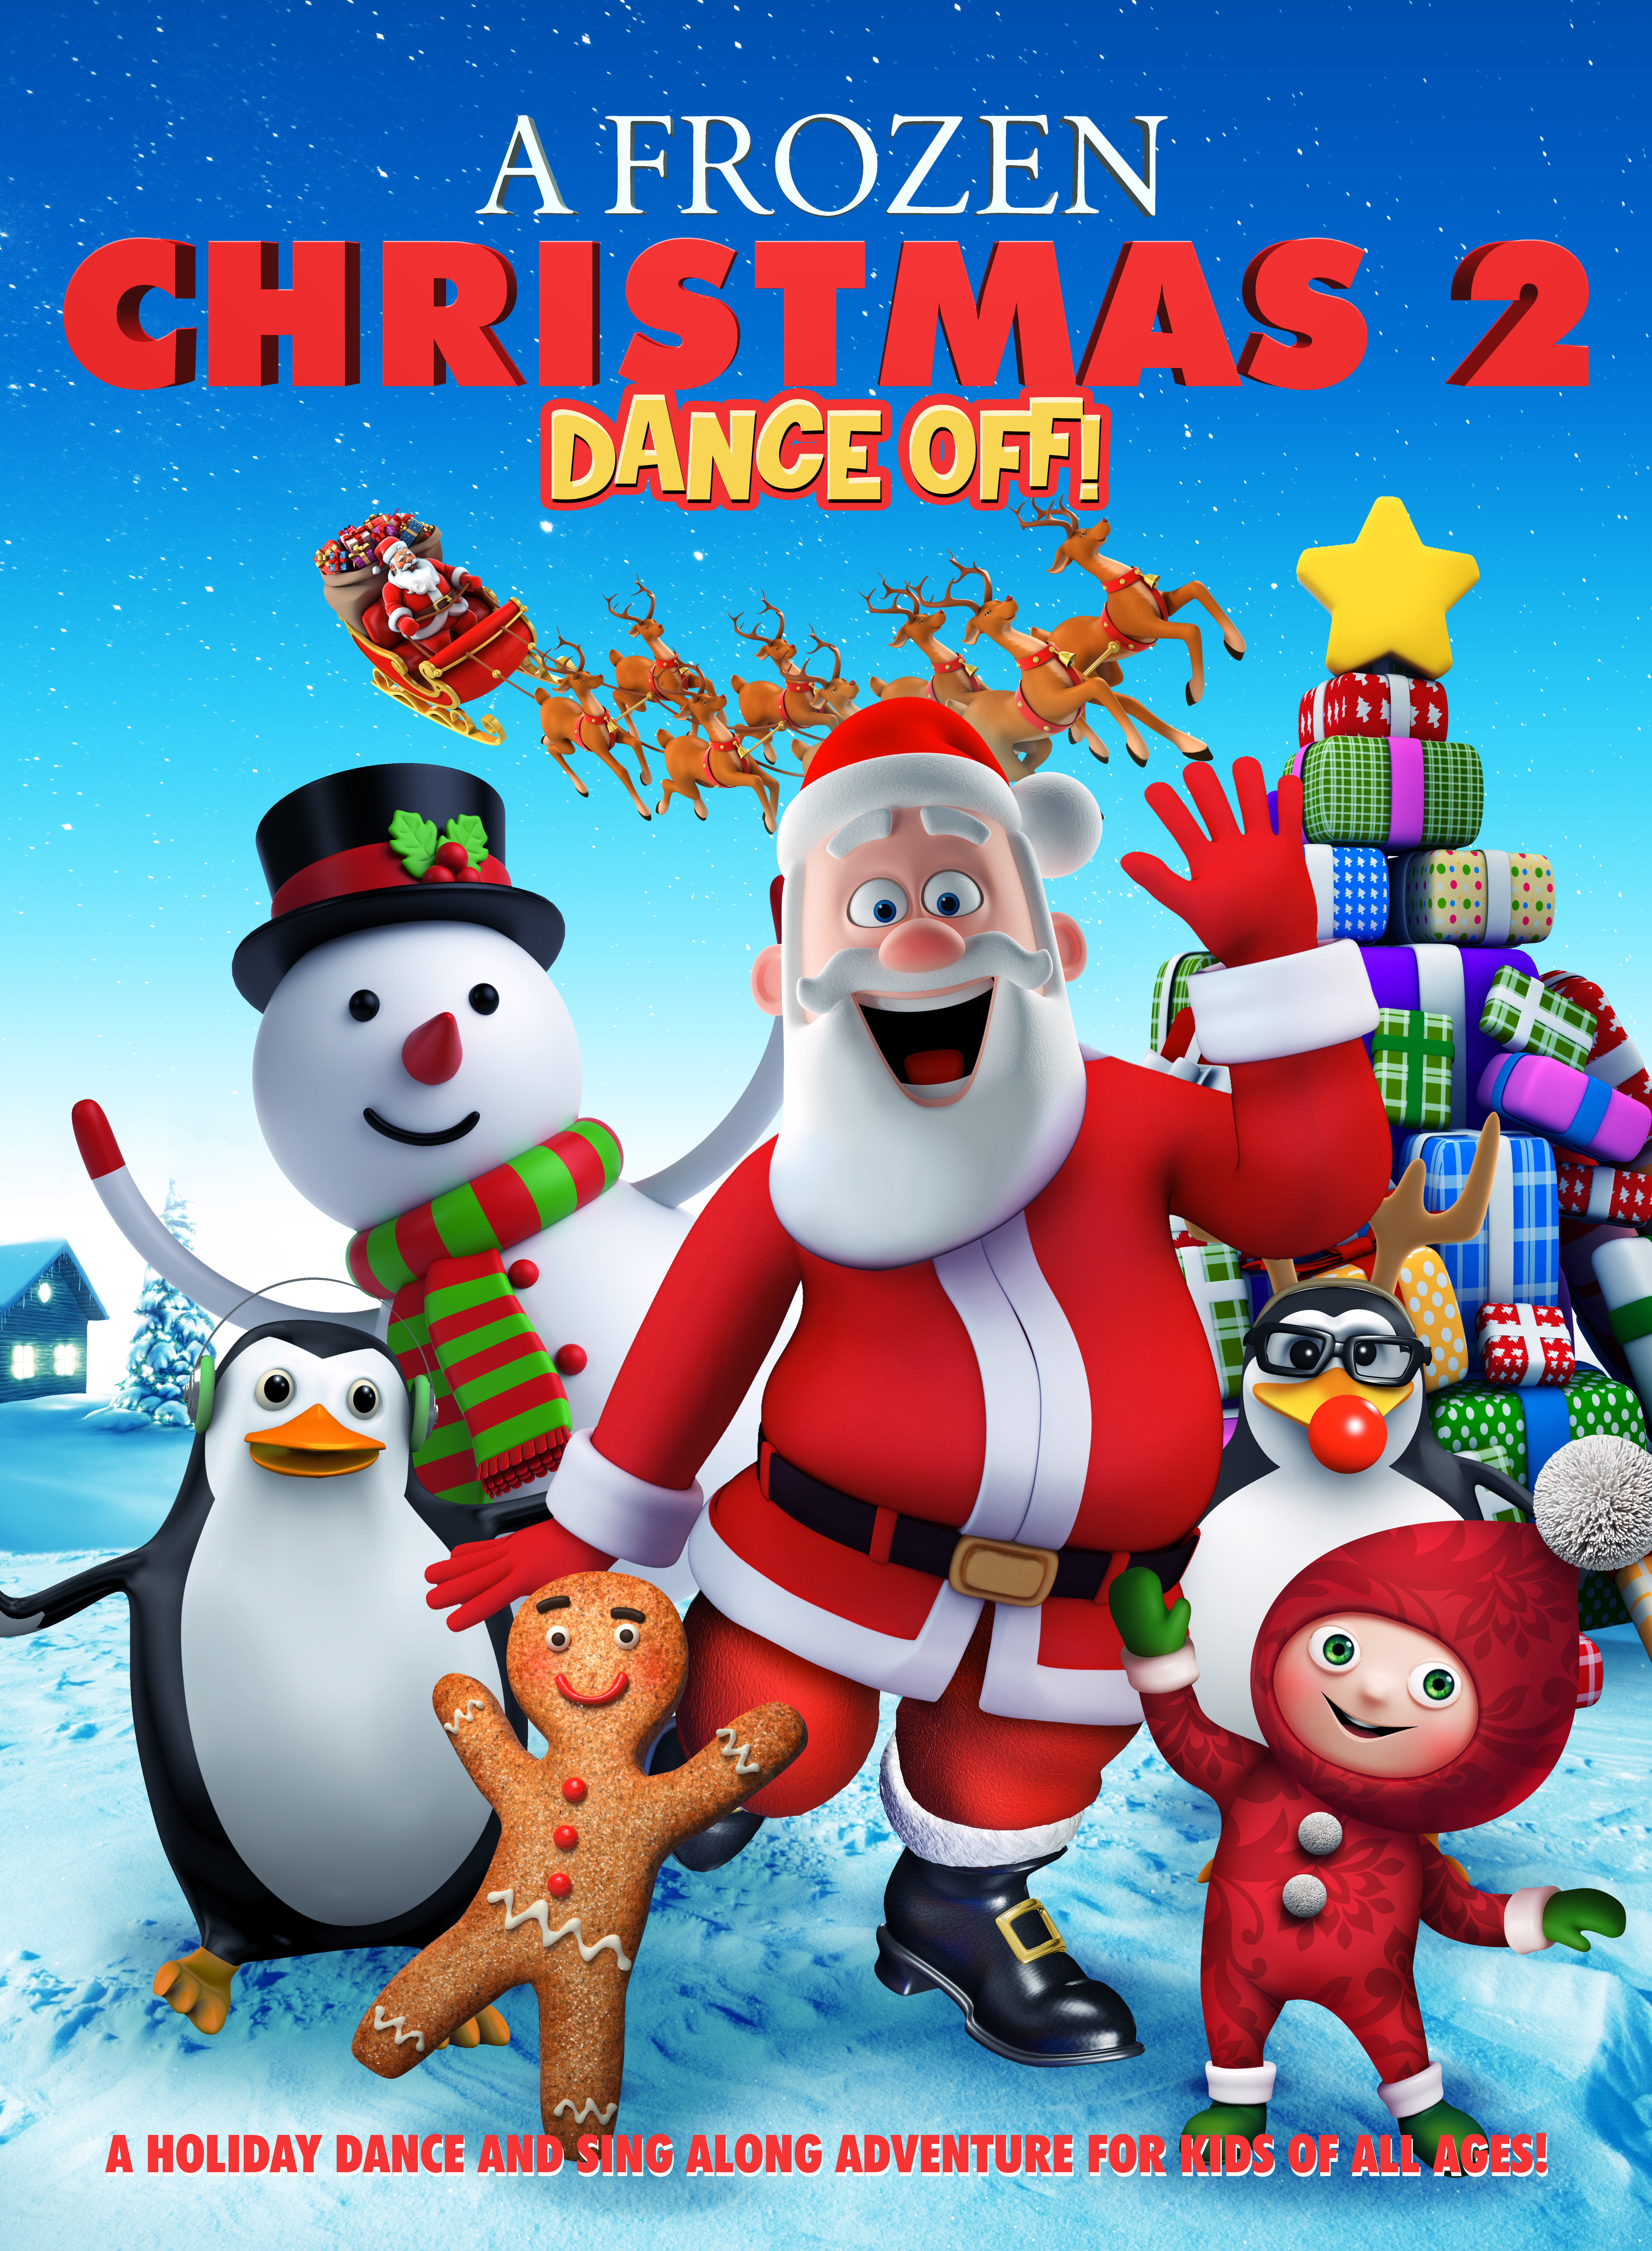 Nonton film A Frozen Christmas 2 layarkaca21 indoxx1 ganool online streaming terbaru